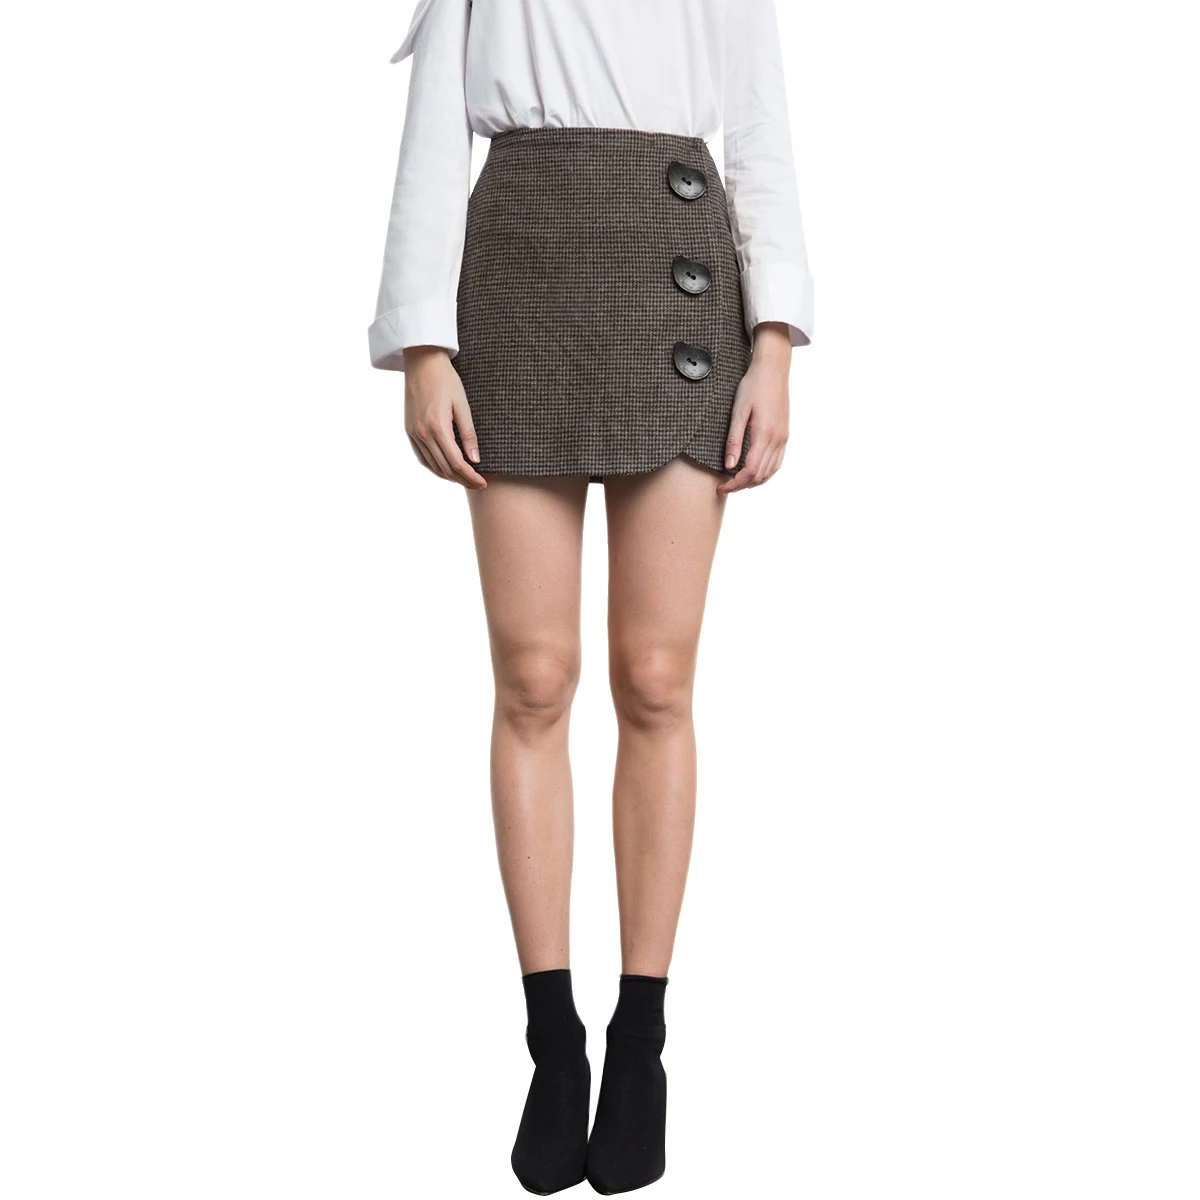 zhizaolian Brand 2018 Women Plaid Mini Skirts Zipper Back Buttons Side ...